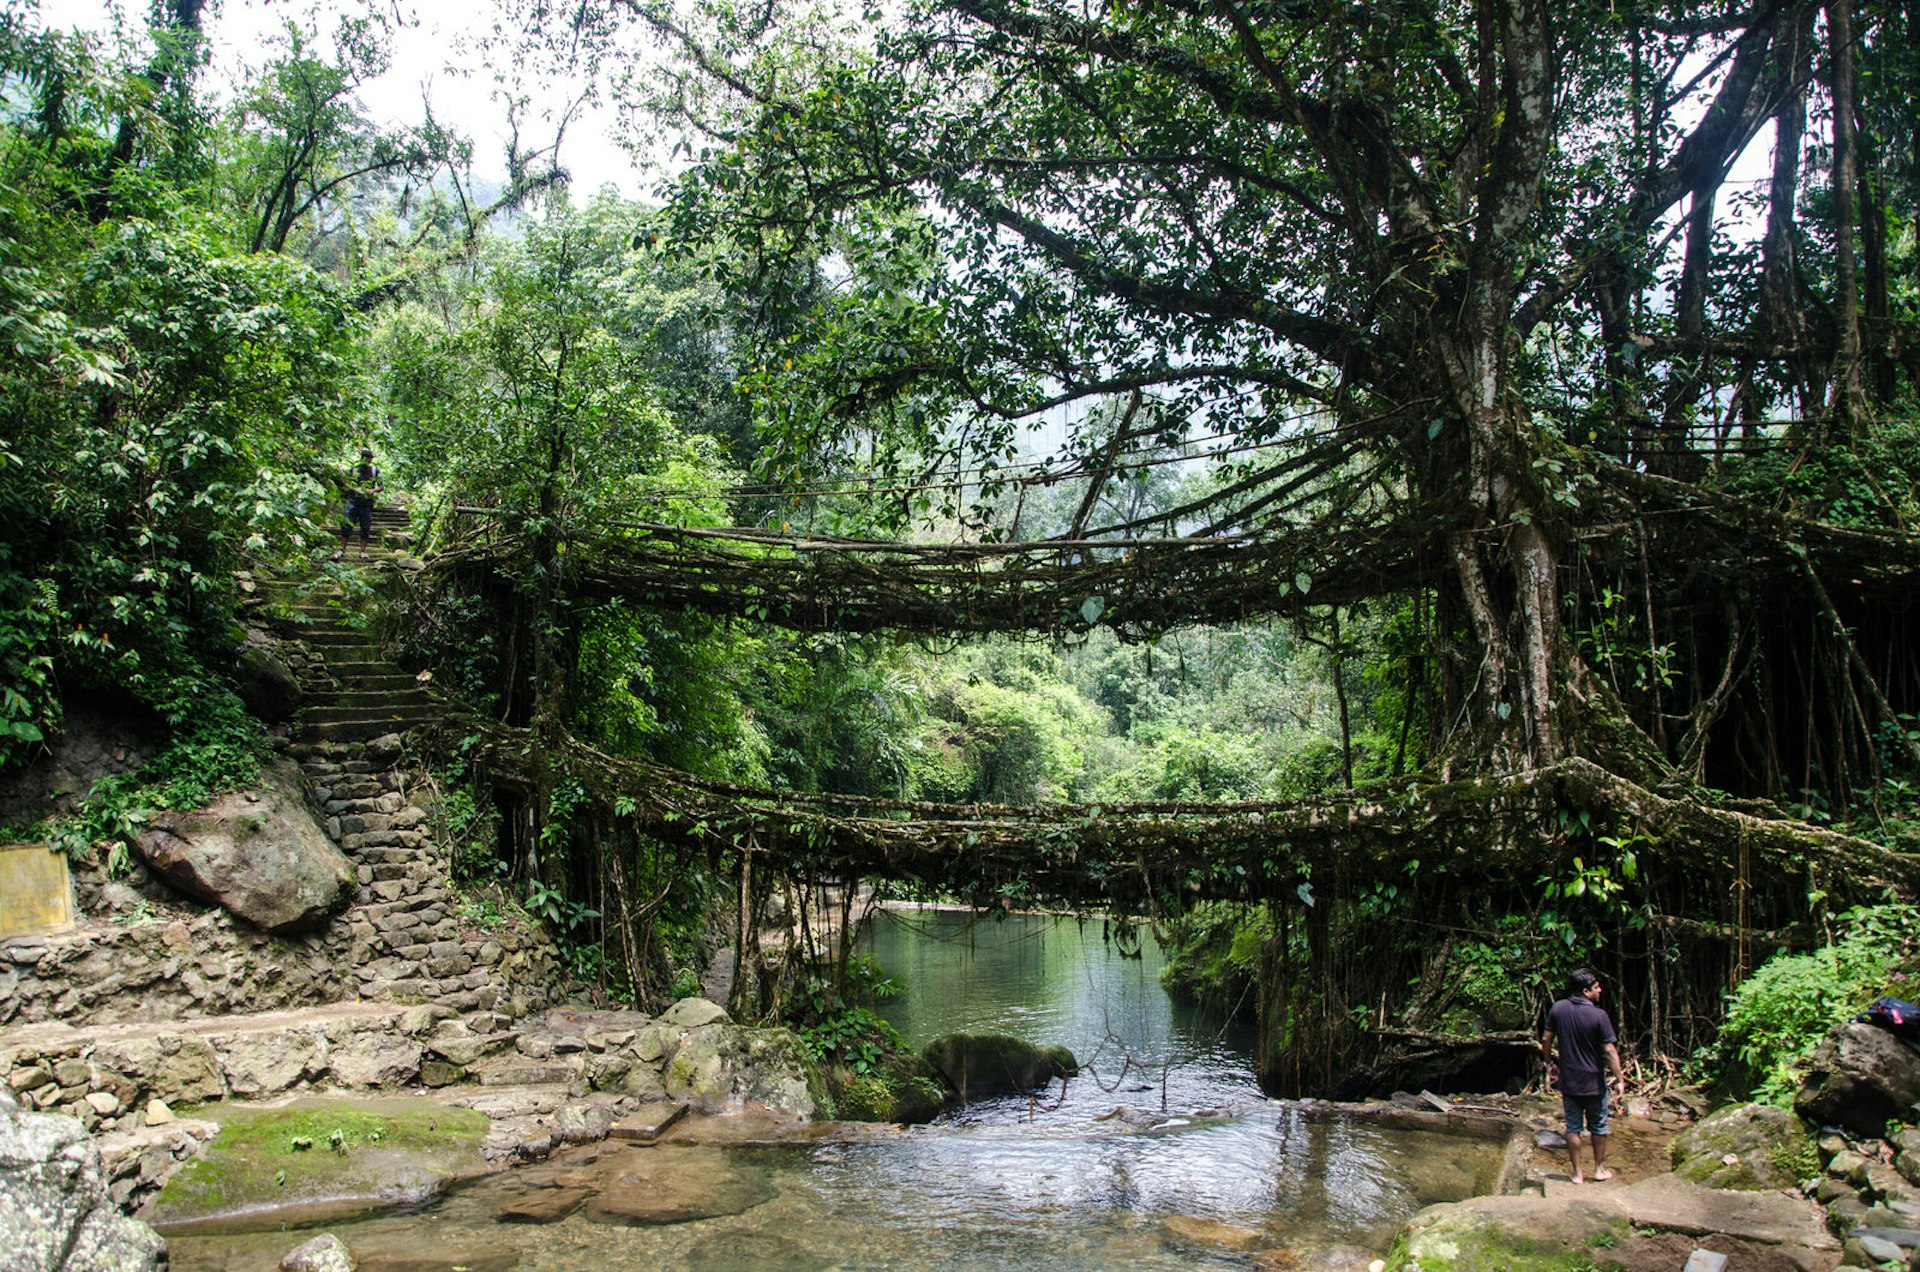 Double-decker living root bridge in the Khasi Hills © Ashwin Kumar / CC BY-SA 2.0